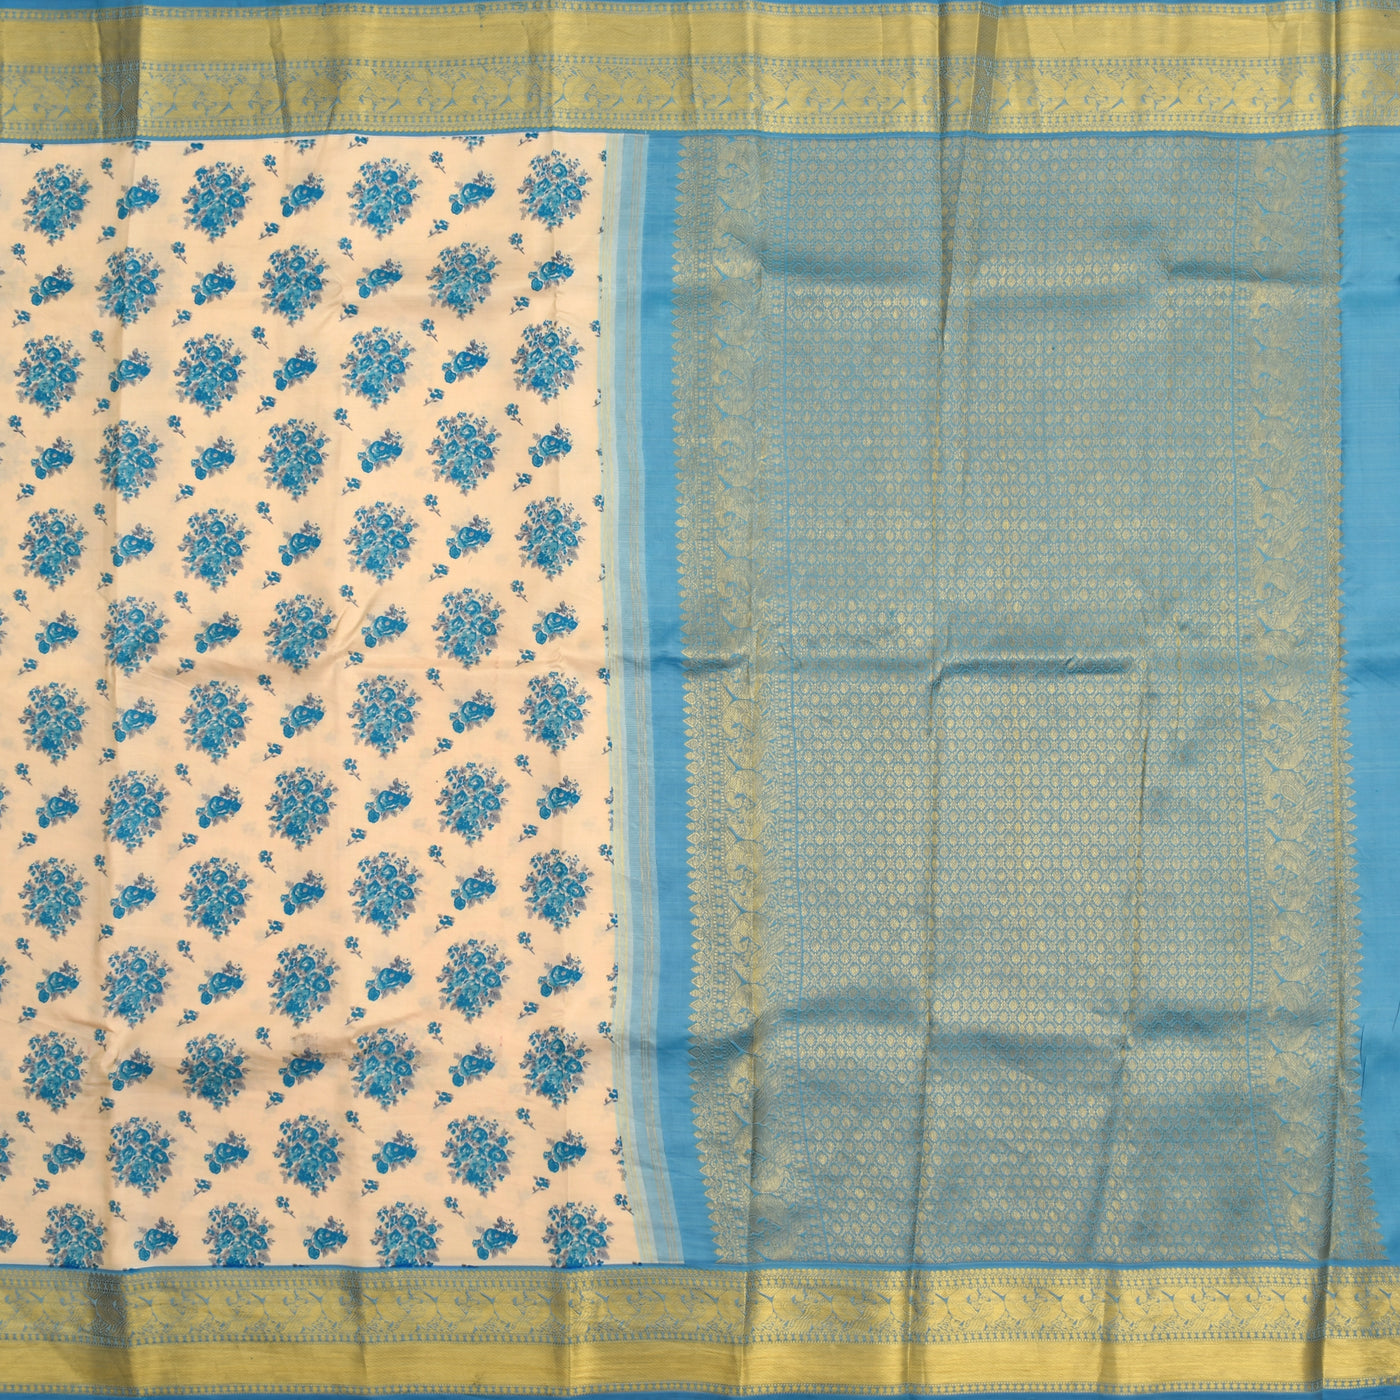 Off White Printed Kanchipuram Silk Saree with Small Printed Design